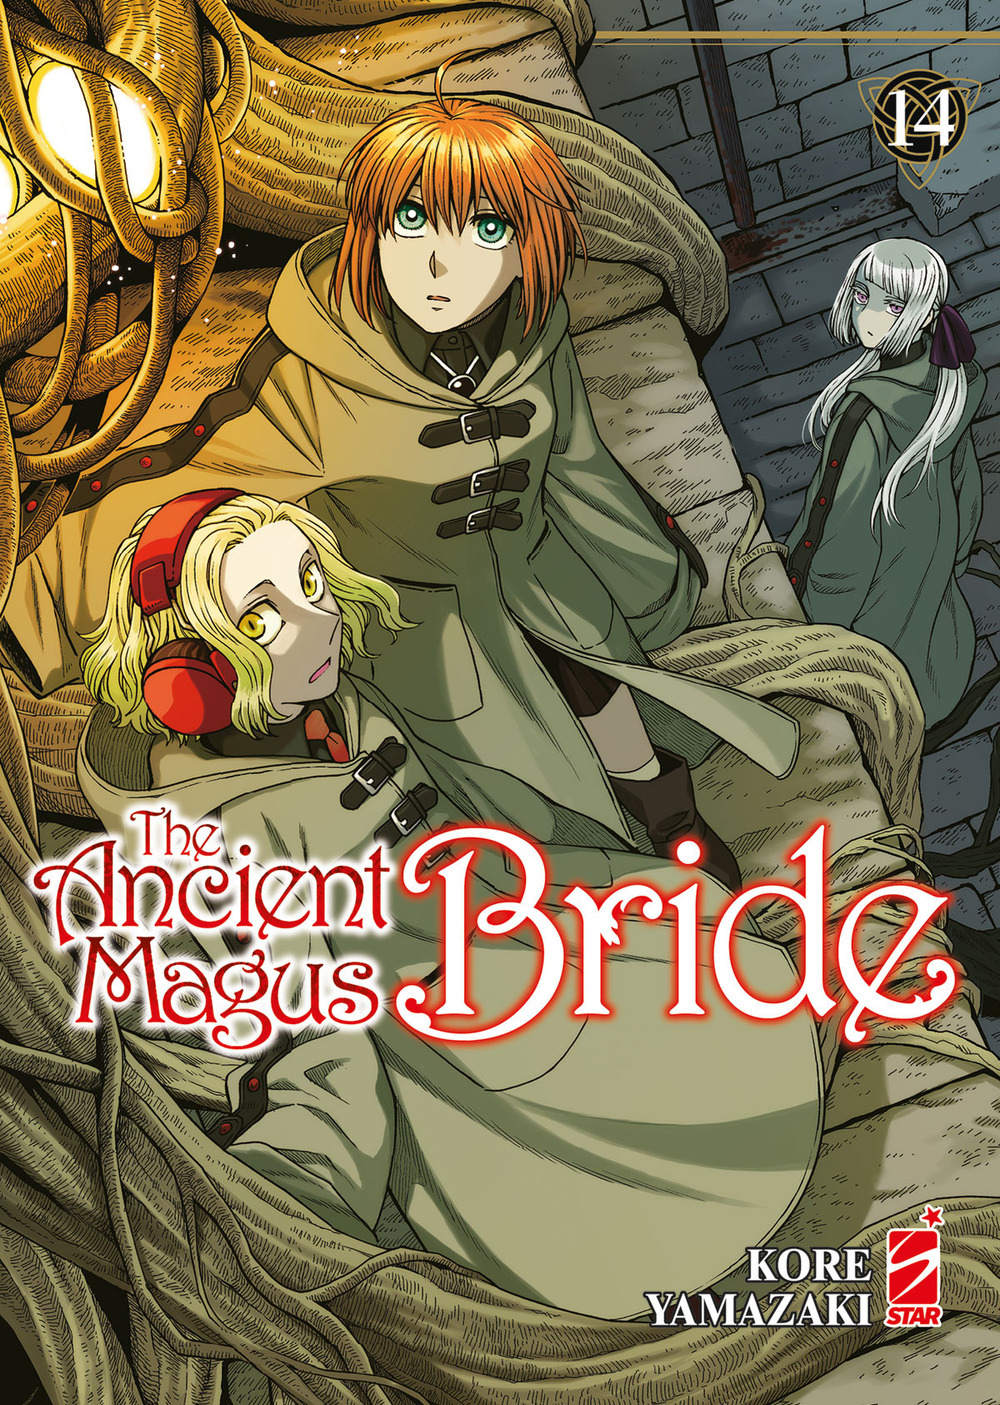 The ancient magus bride. Vol. 14